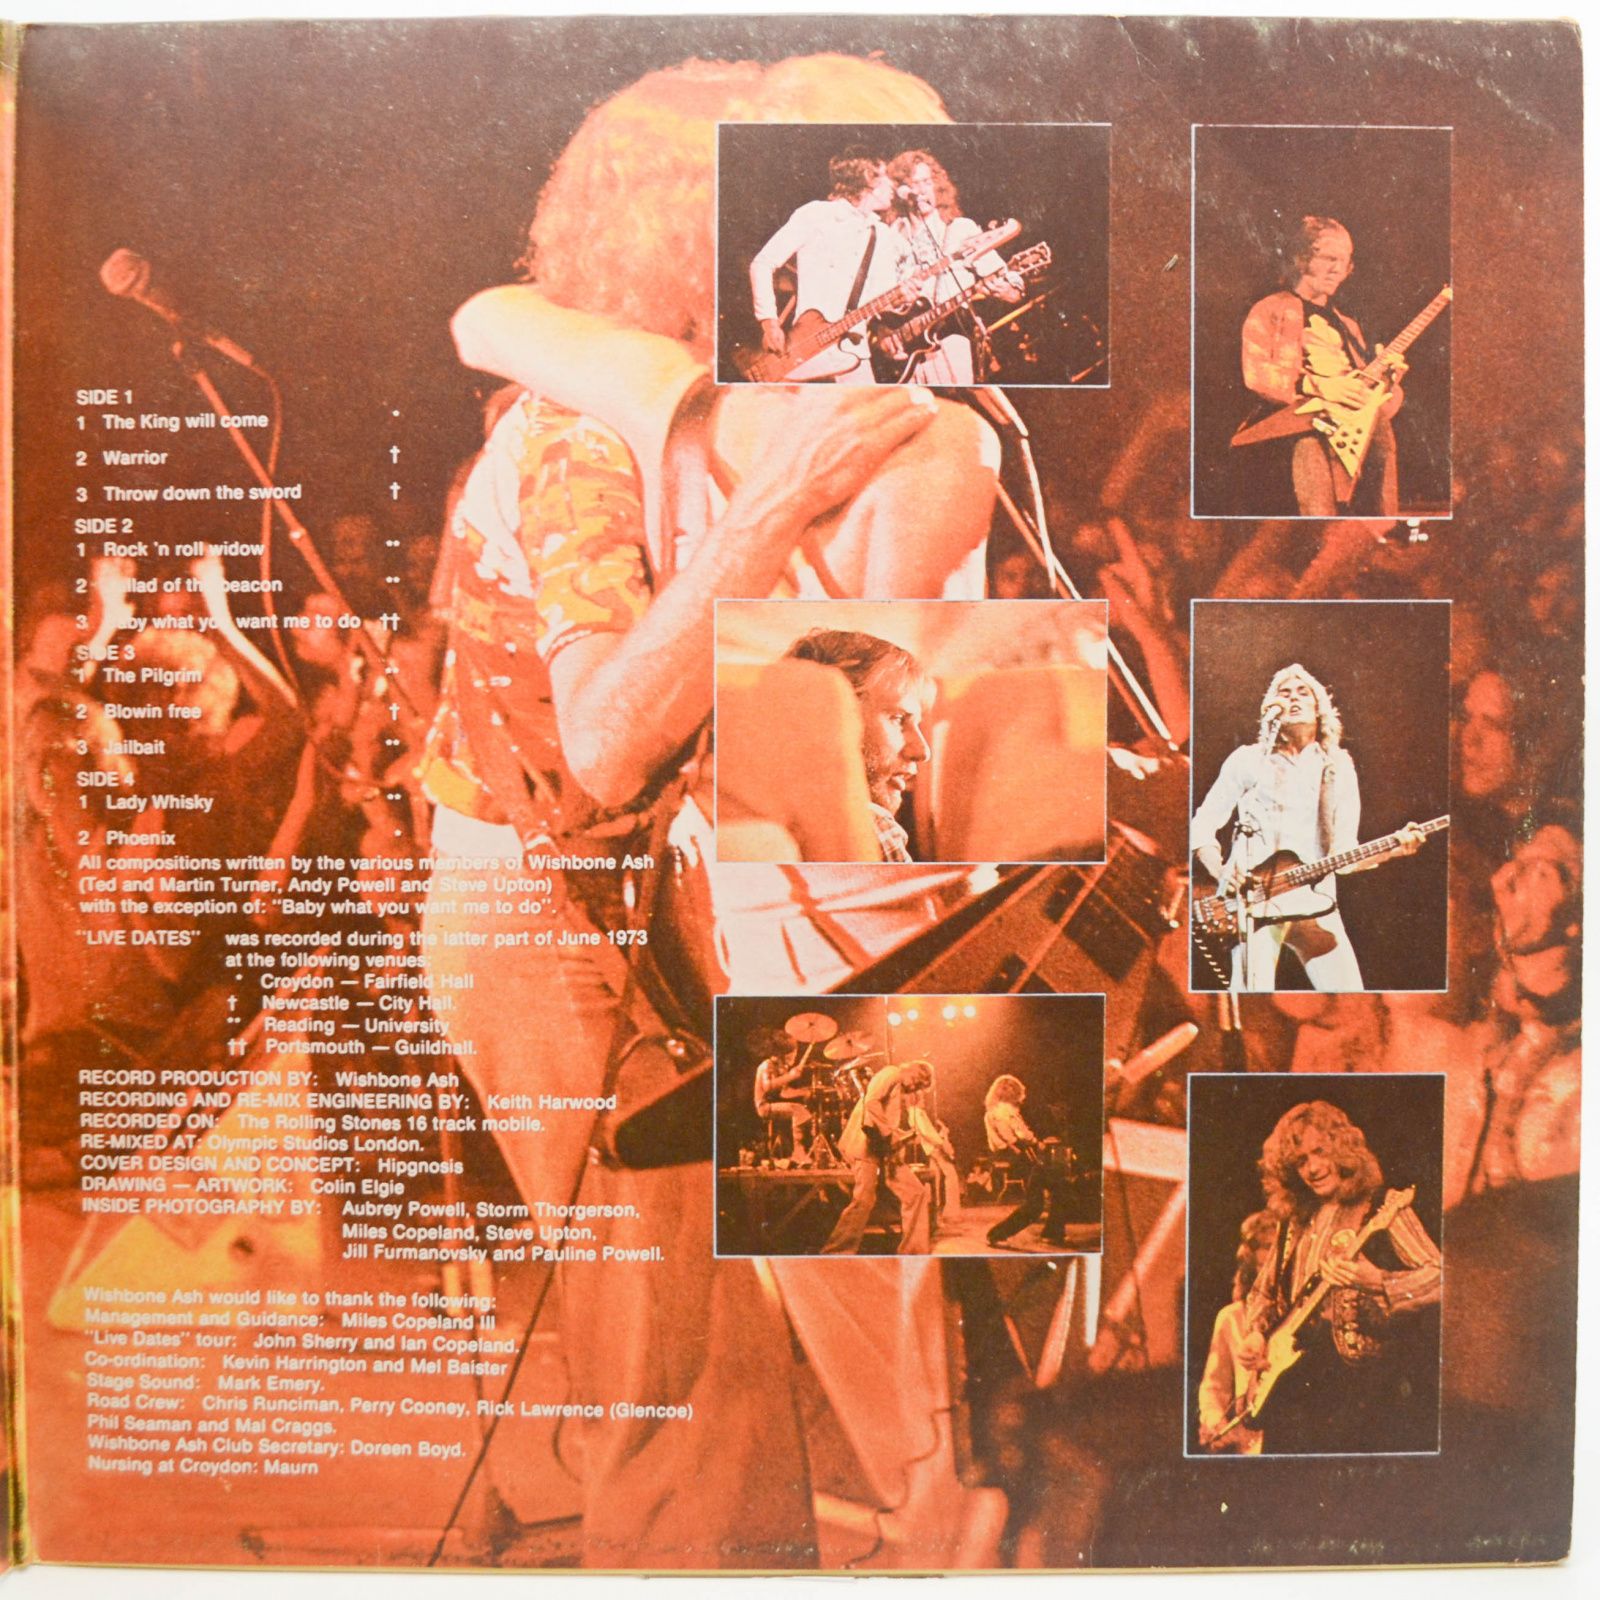 Wishbone Ash — Live Dates (2LP), 1973